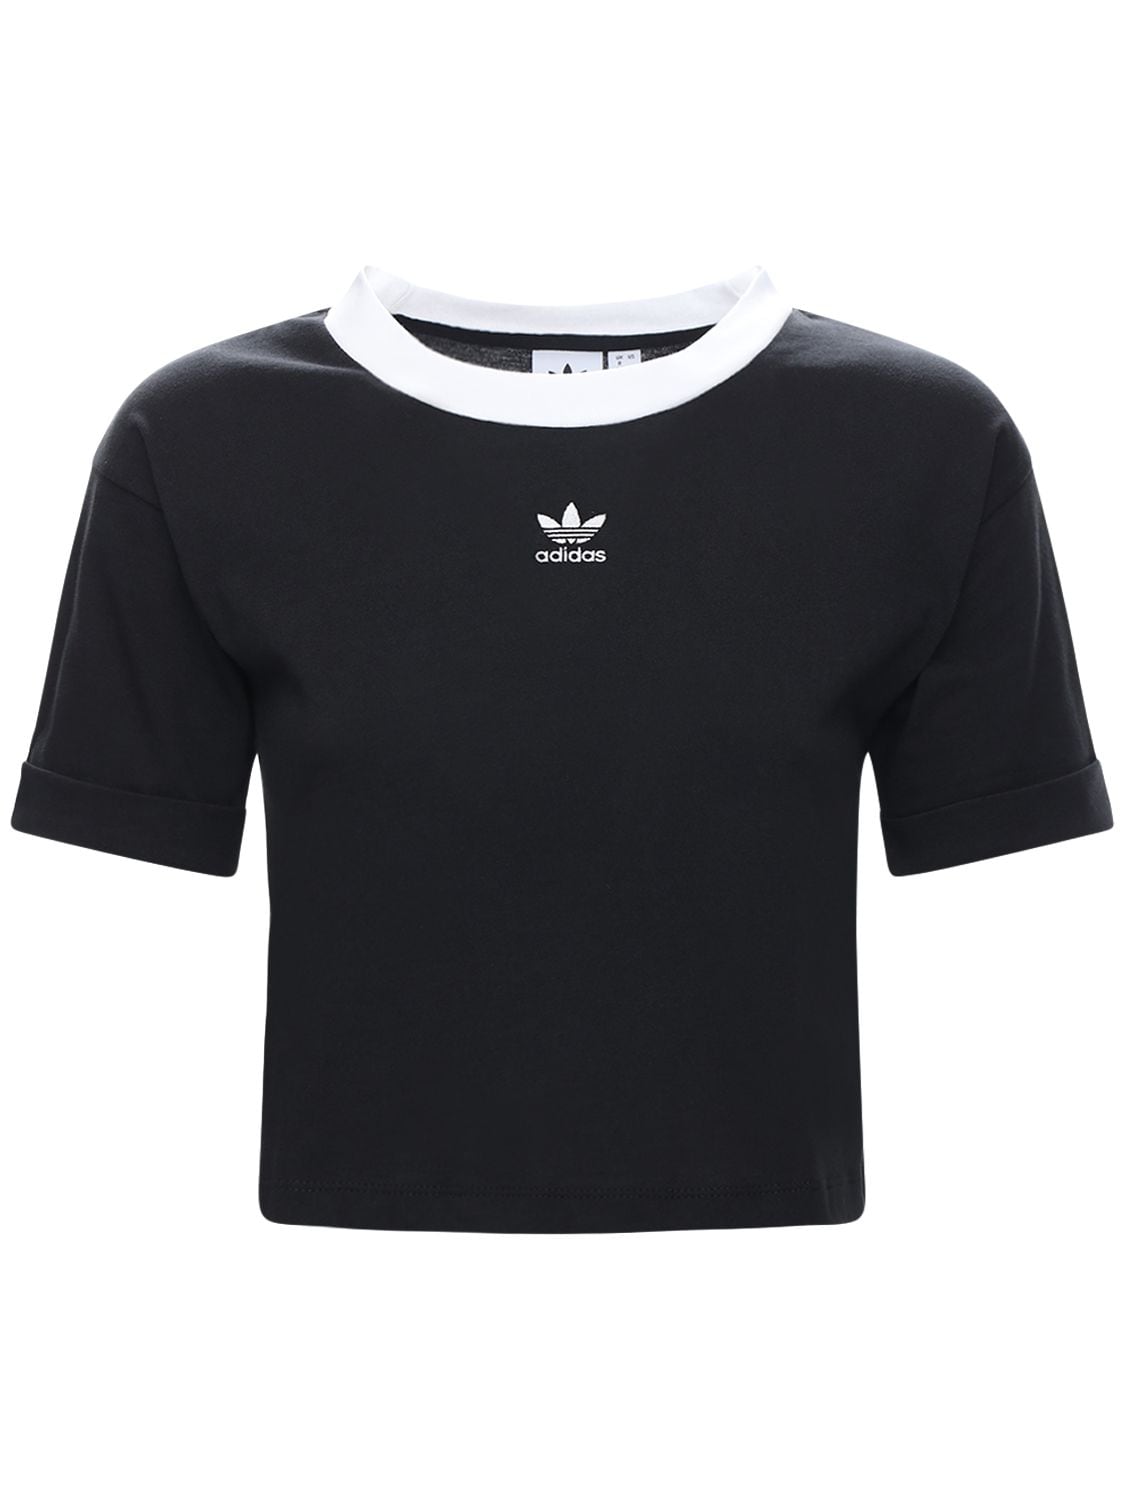 Adidas Originals - Logo cotton crop top - Black | Luisaviaroma